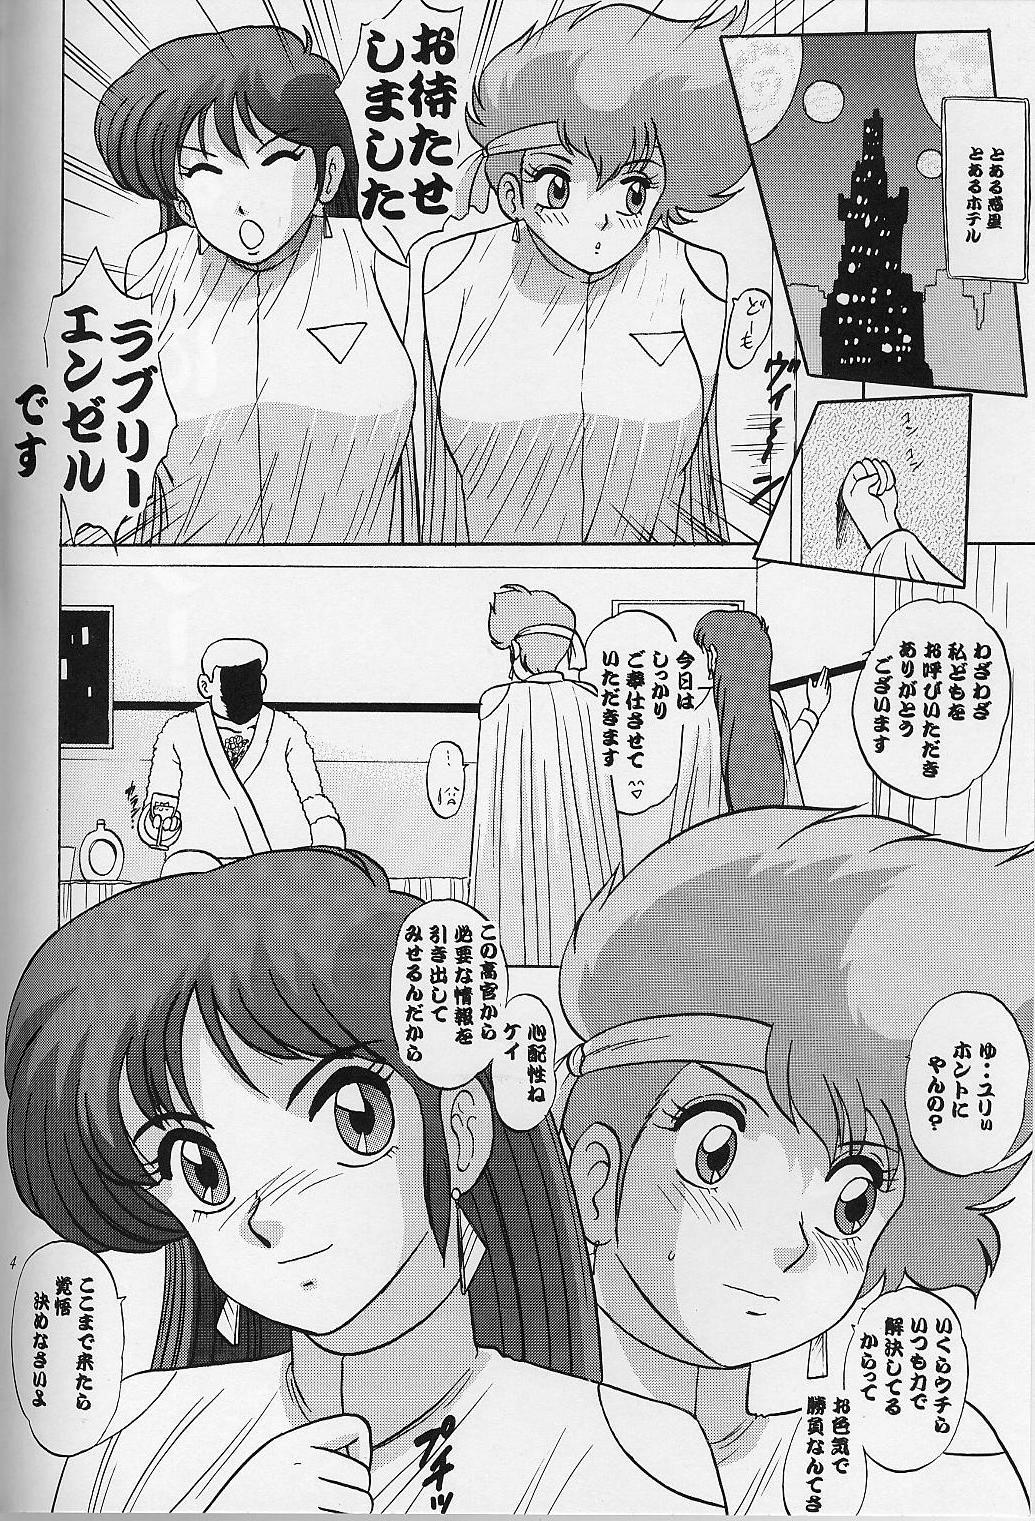 Massages Tenshi no Himitsu - Dirty pair Amatuer - Page 3